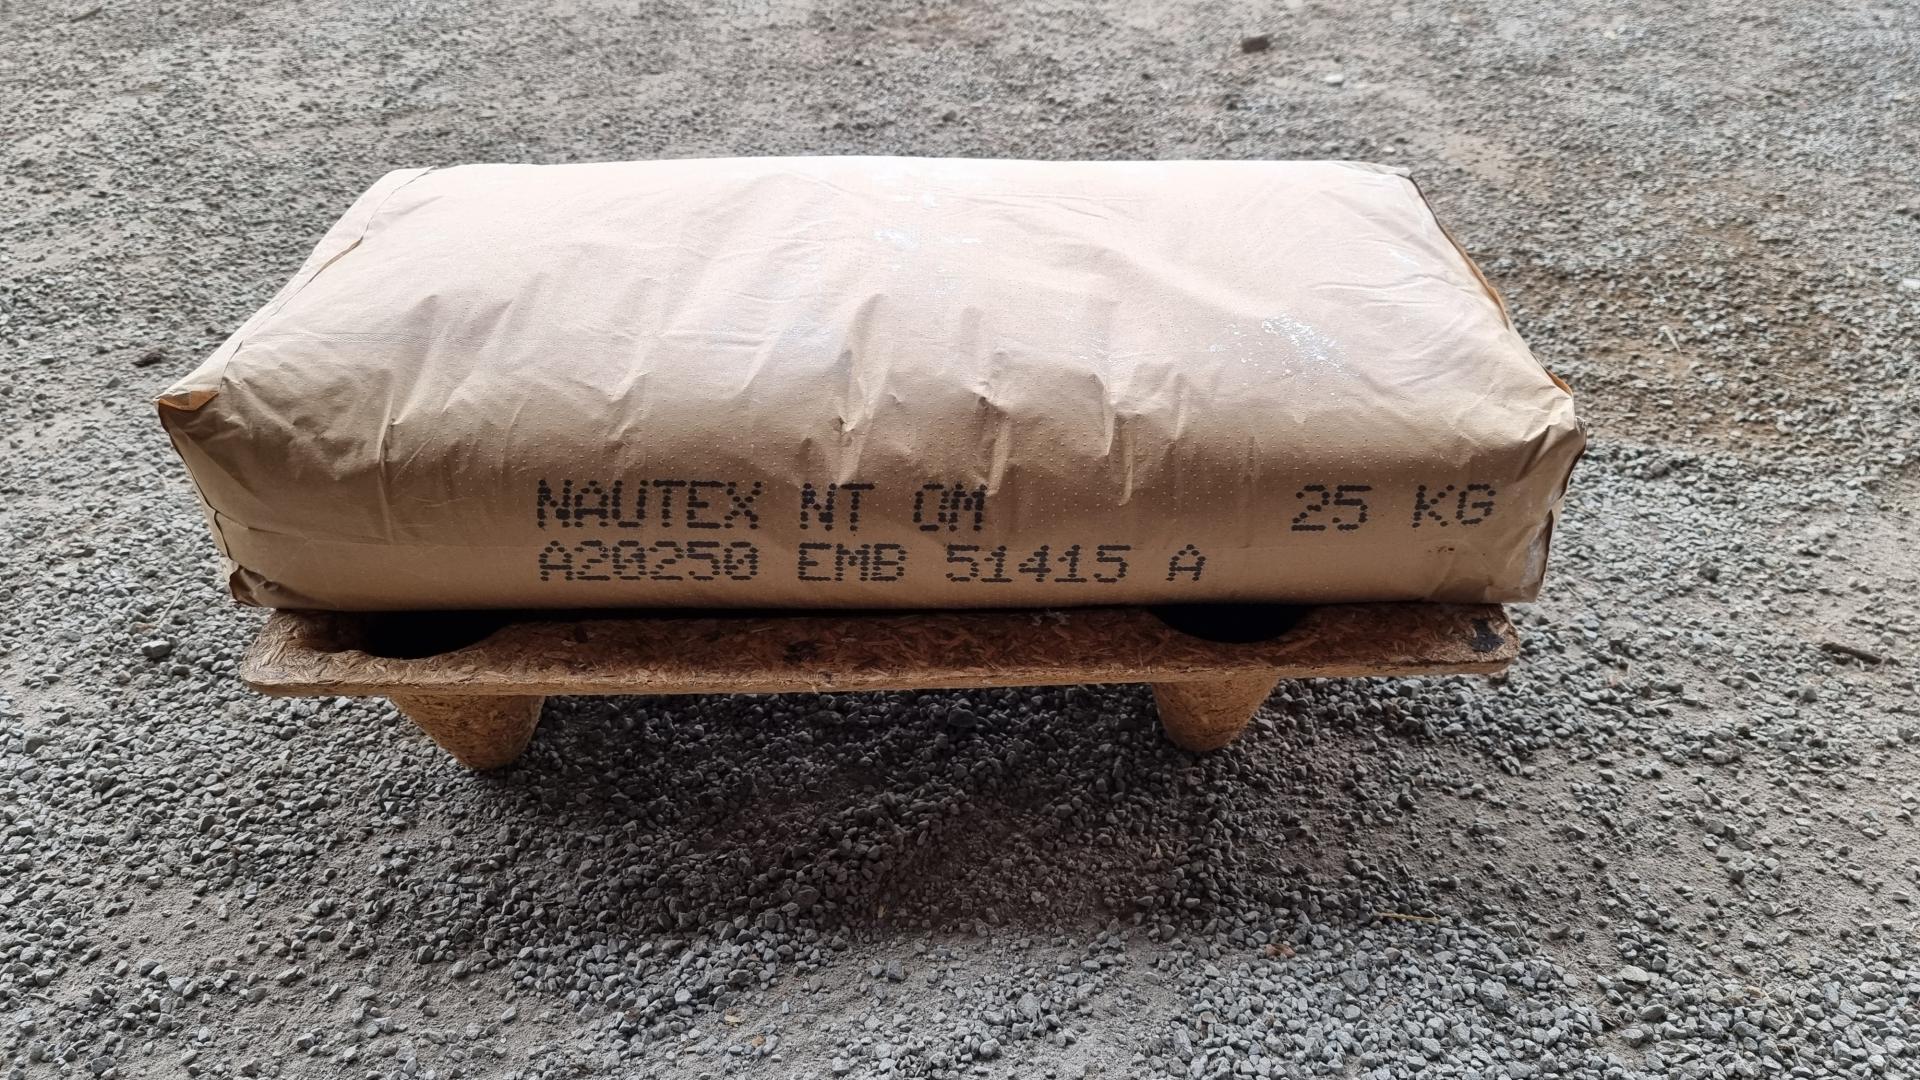 Nautex 25kgs edivert